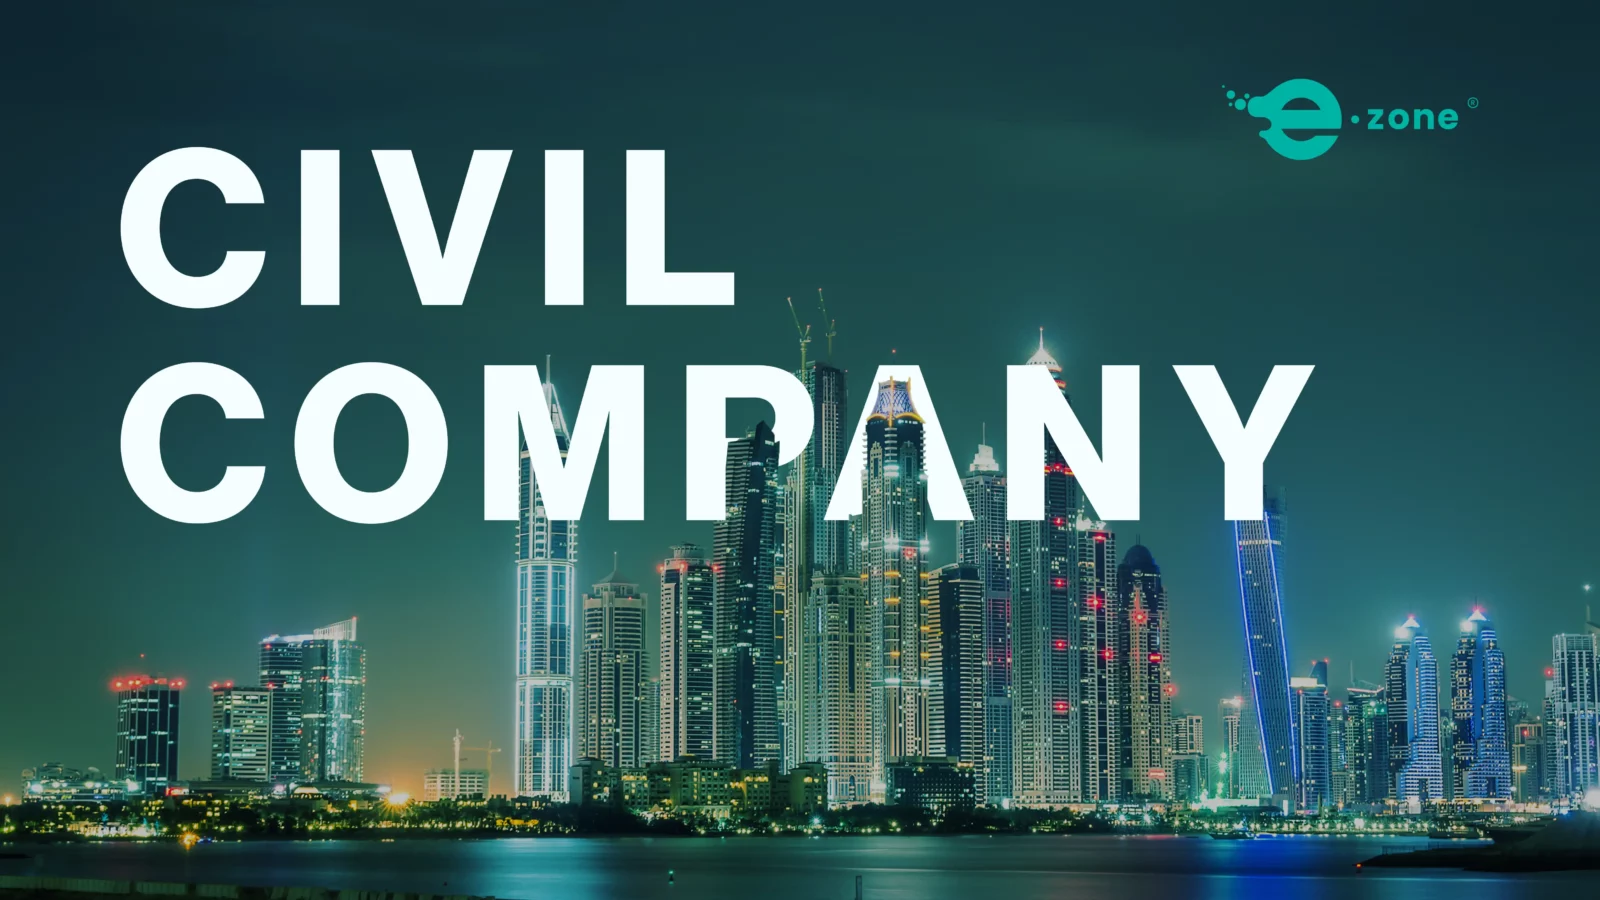 Dubai buildings with Civil Company as headline